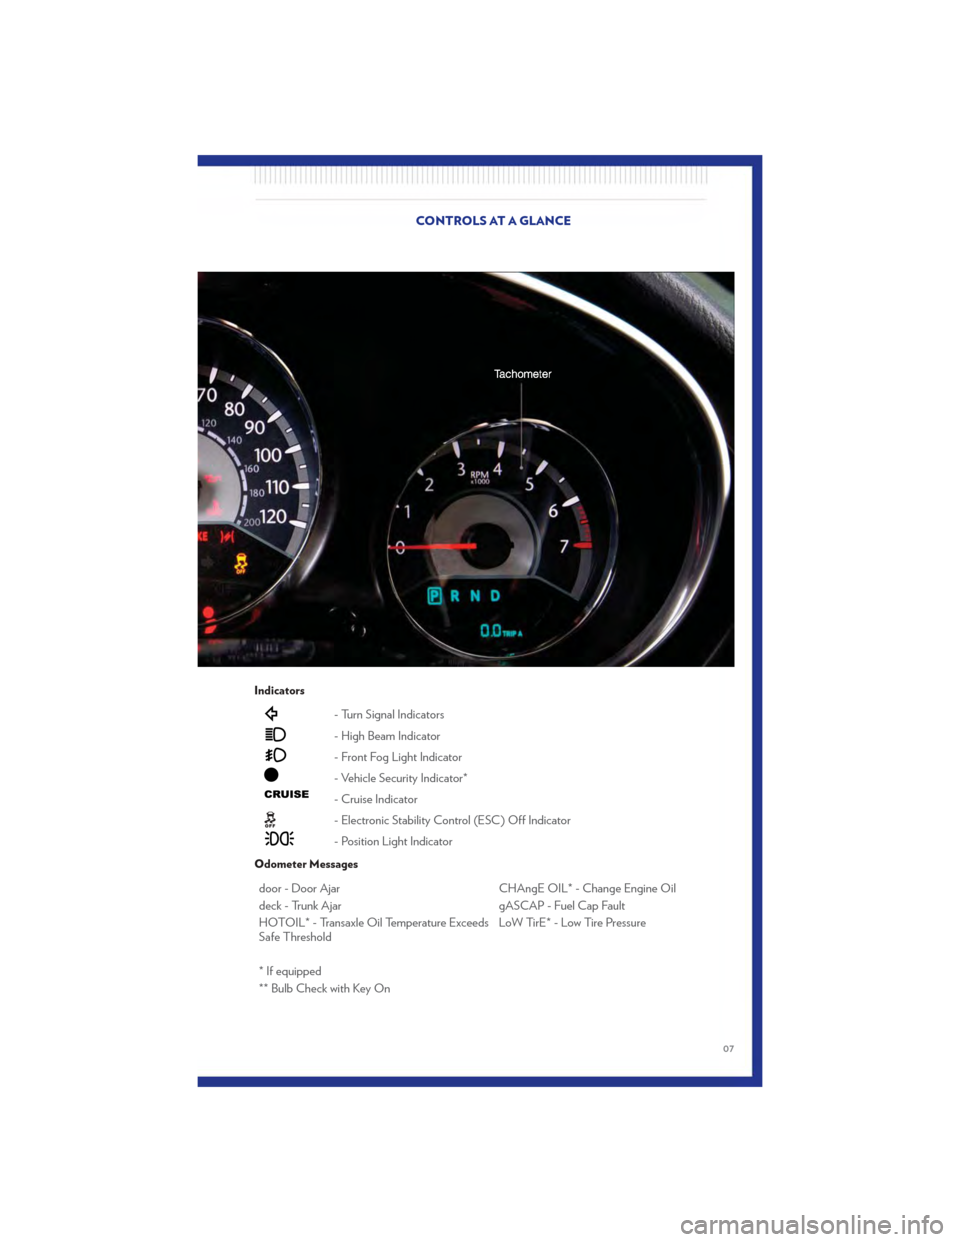 CHRYSLER 200 2011 1.G User Guide Indicators
- Turn Signal Indicators
- High Beam Indicator
- Front Fog Light Indicator
- Vehicle Security Indicator*
- Cruise Indicator
- Electronic Stability Control (ESC) Off Indicator
- Position Lig